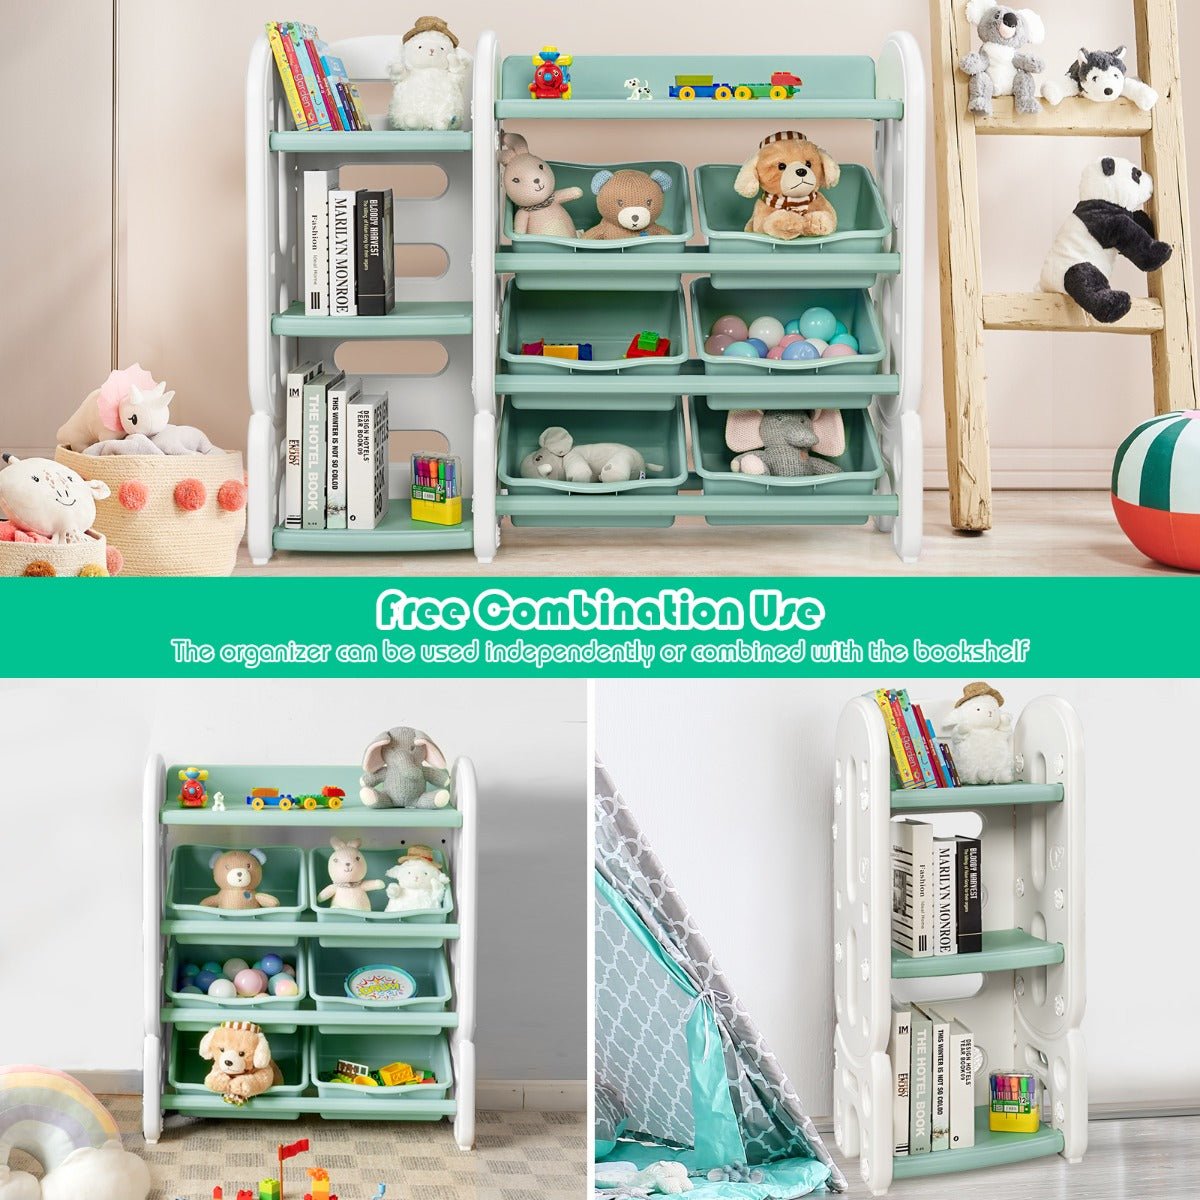 Kid-Friendly Green Toy Storage with Bookshelf - Playful Storage Solution